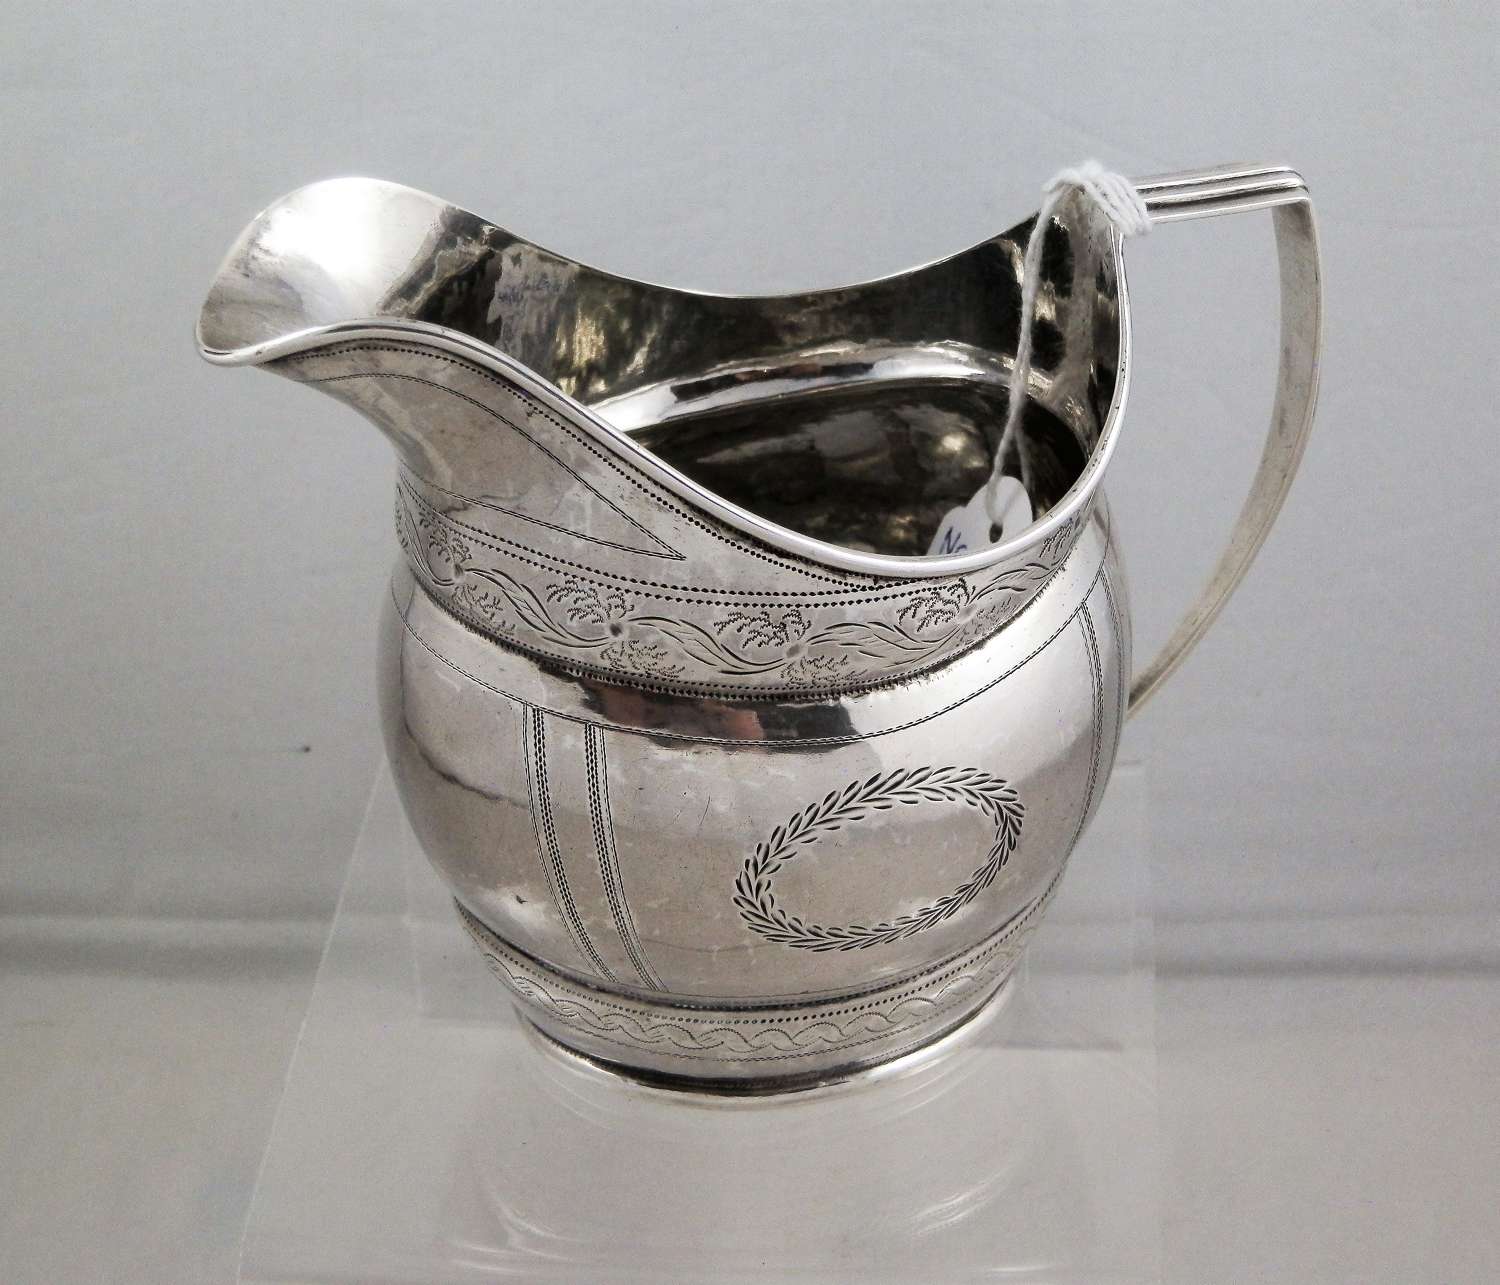 Newcastle silver cream jug, John Walton, c.1820